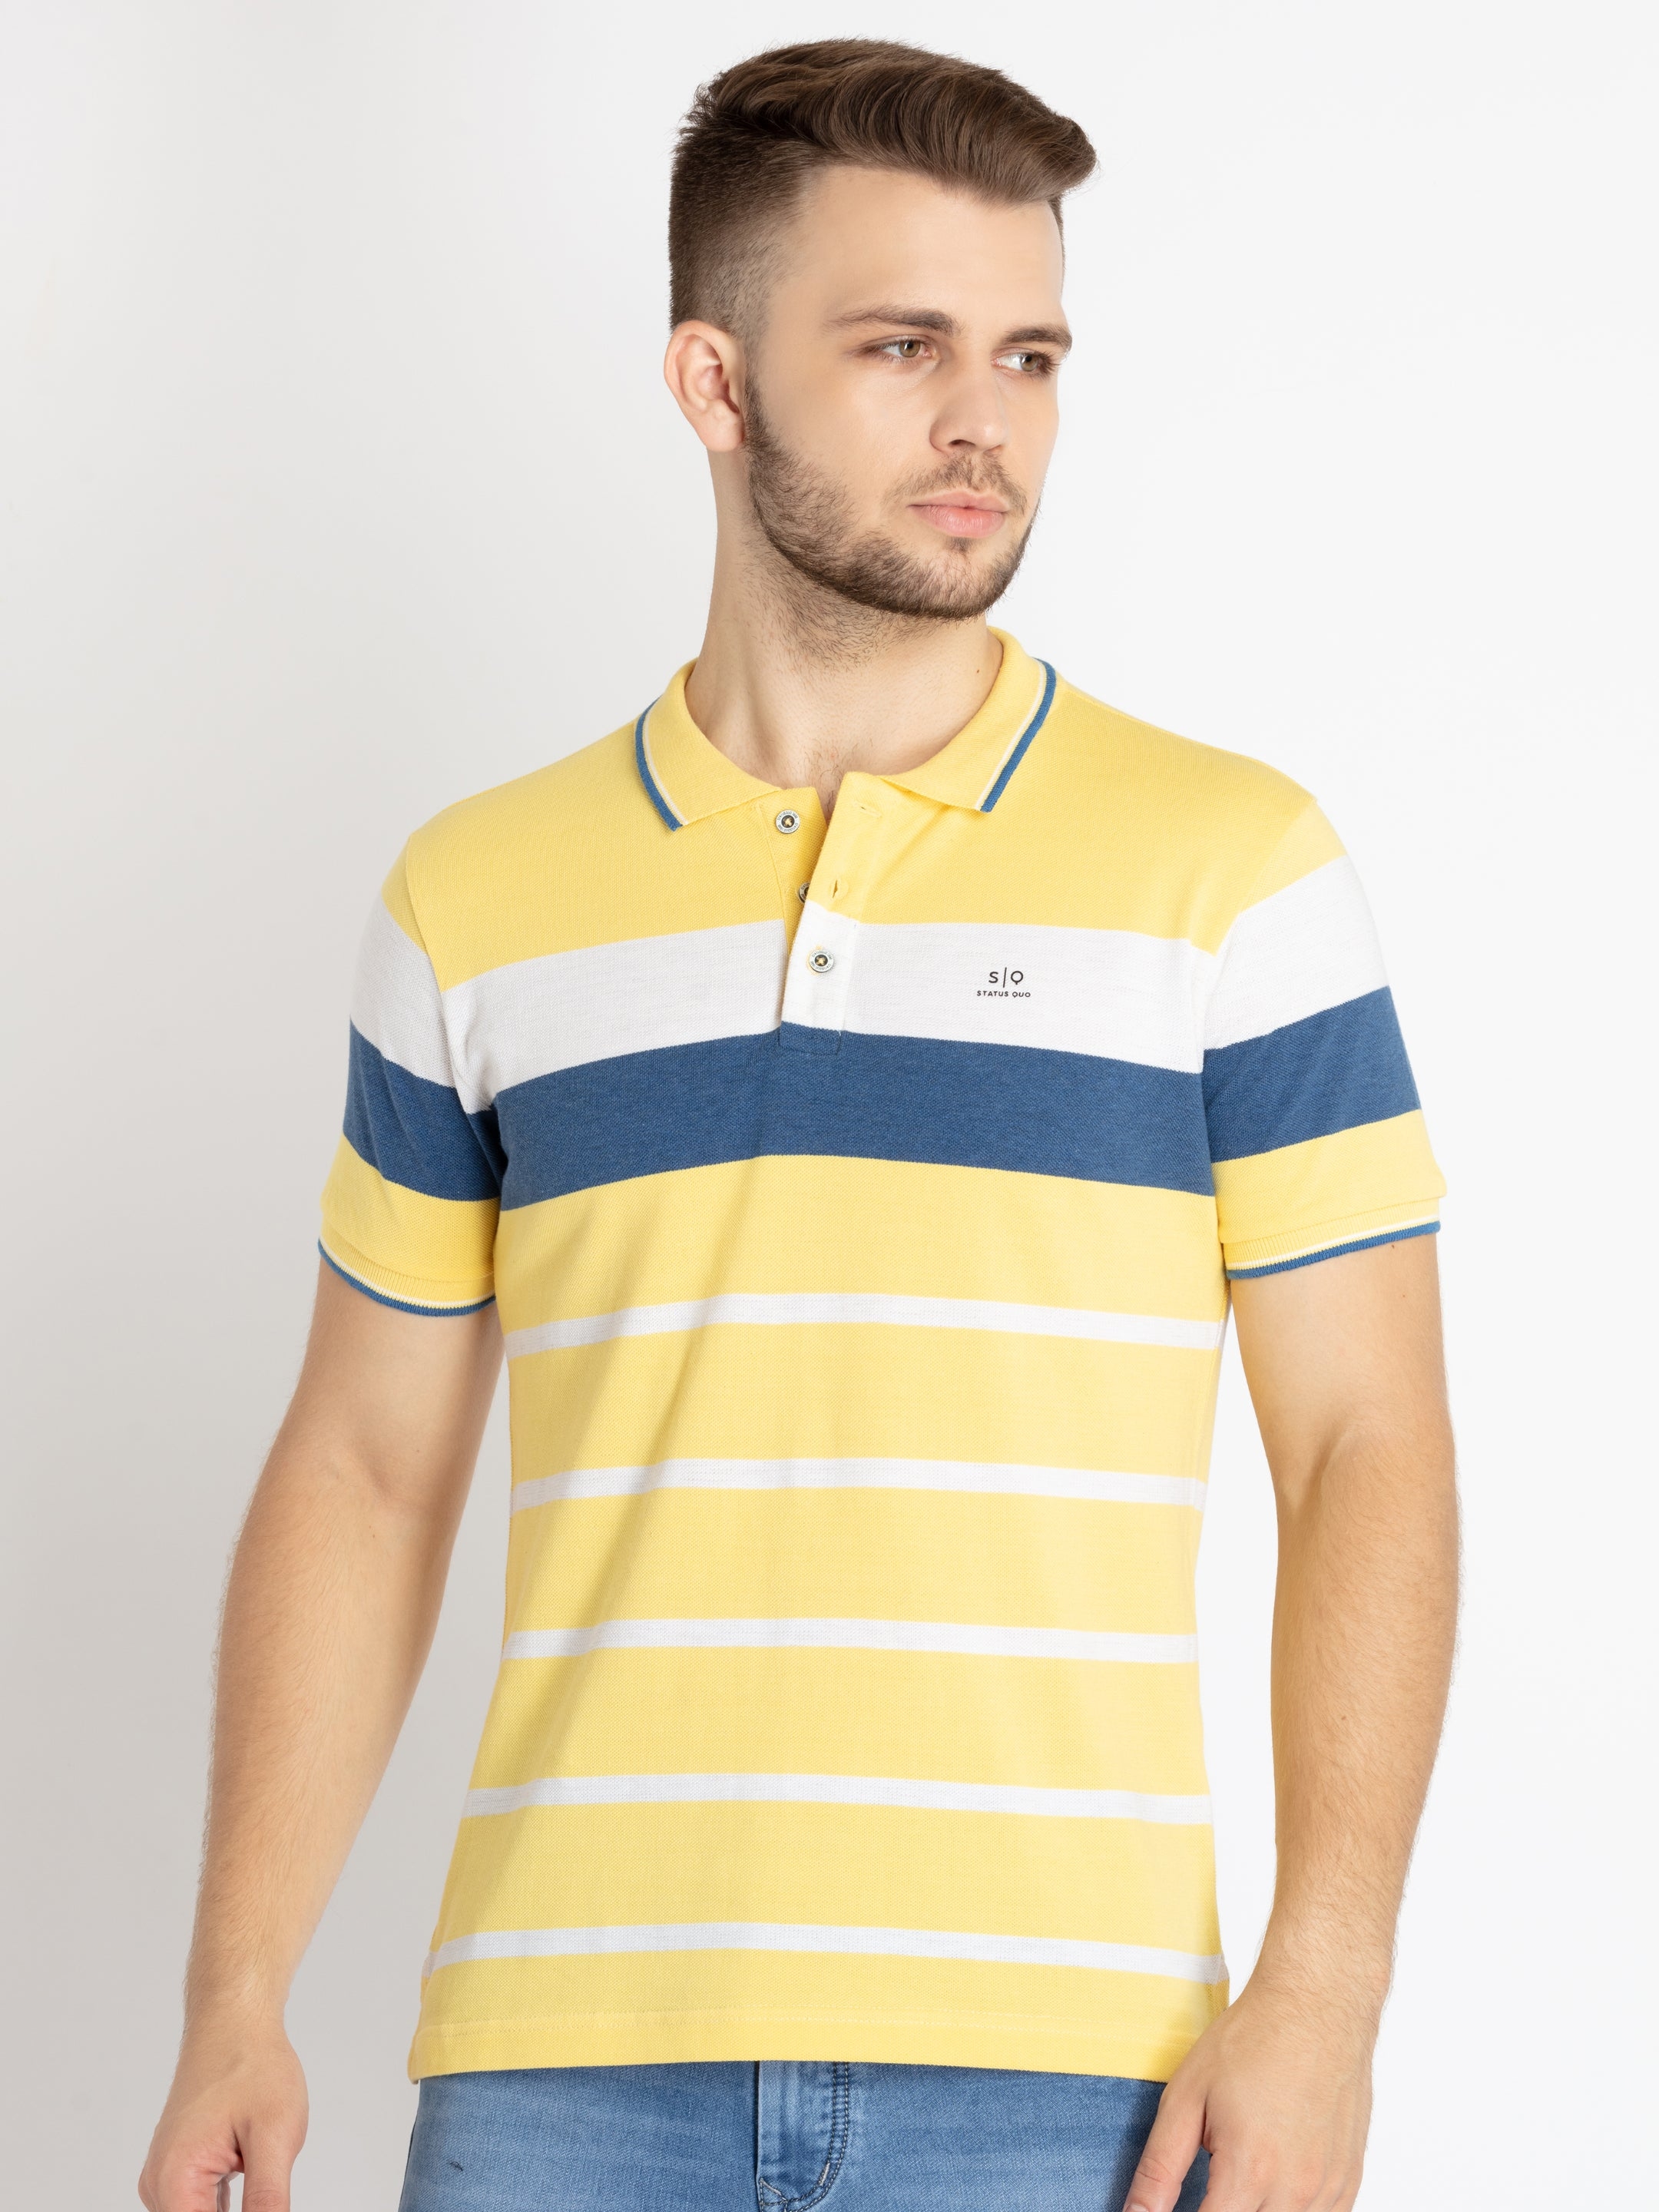 Men's Yellow Cotton Striped Polo T-Shirts